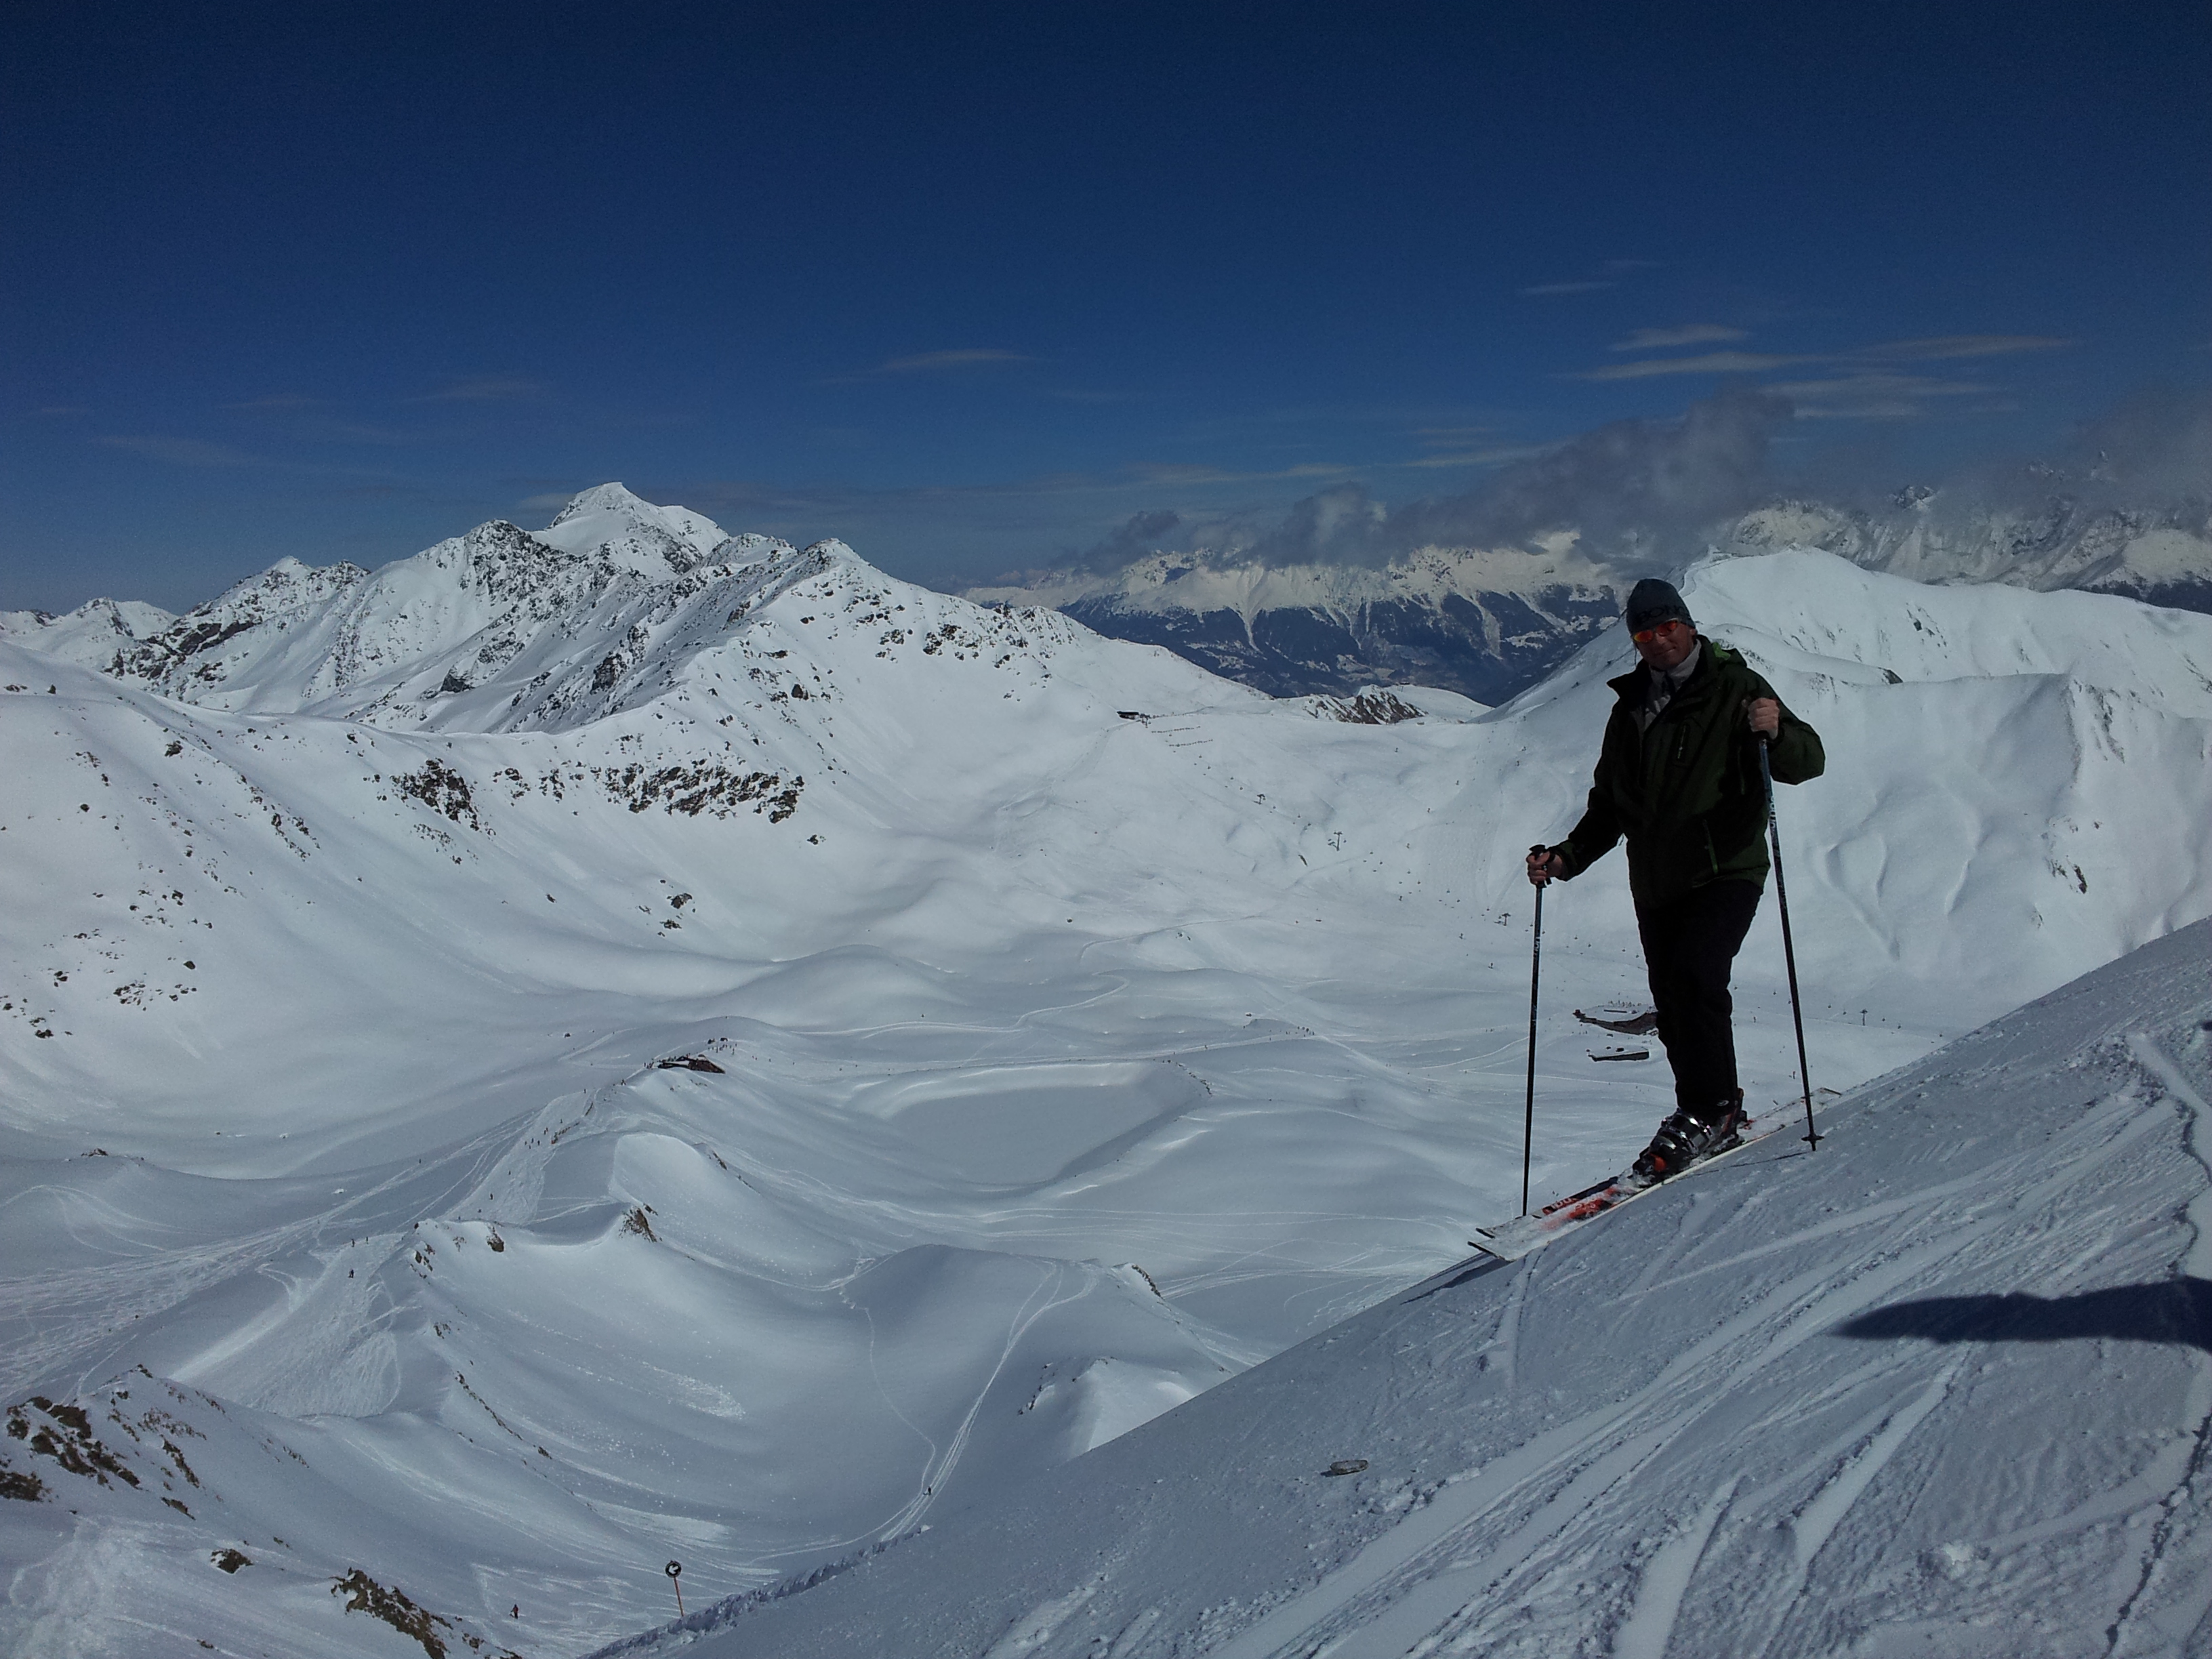 Great skiing area Serfaus-Fiss-Ladis, Austrian Alps. Enjoy 3 min downhill video